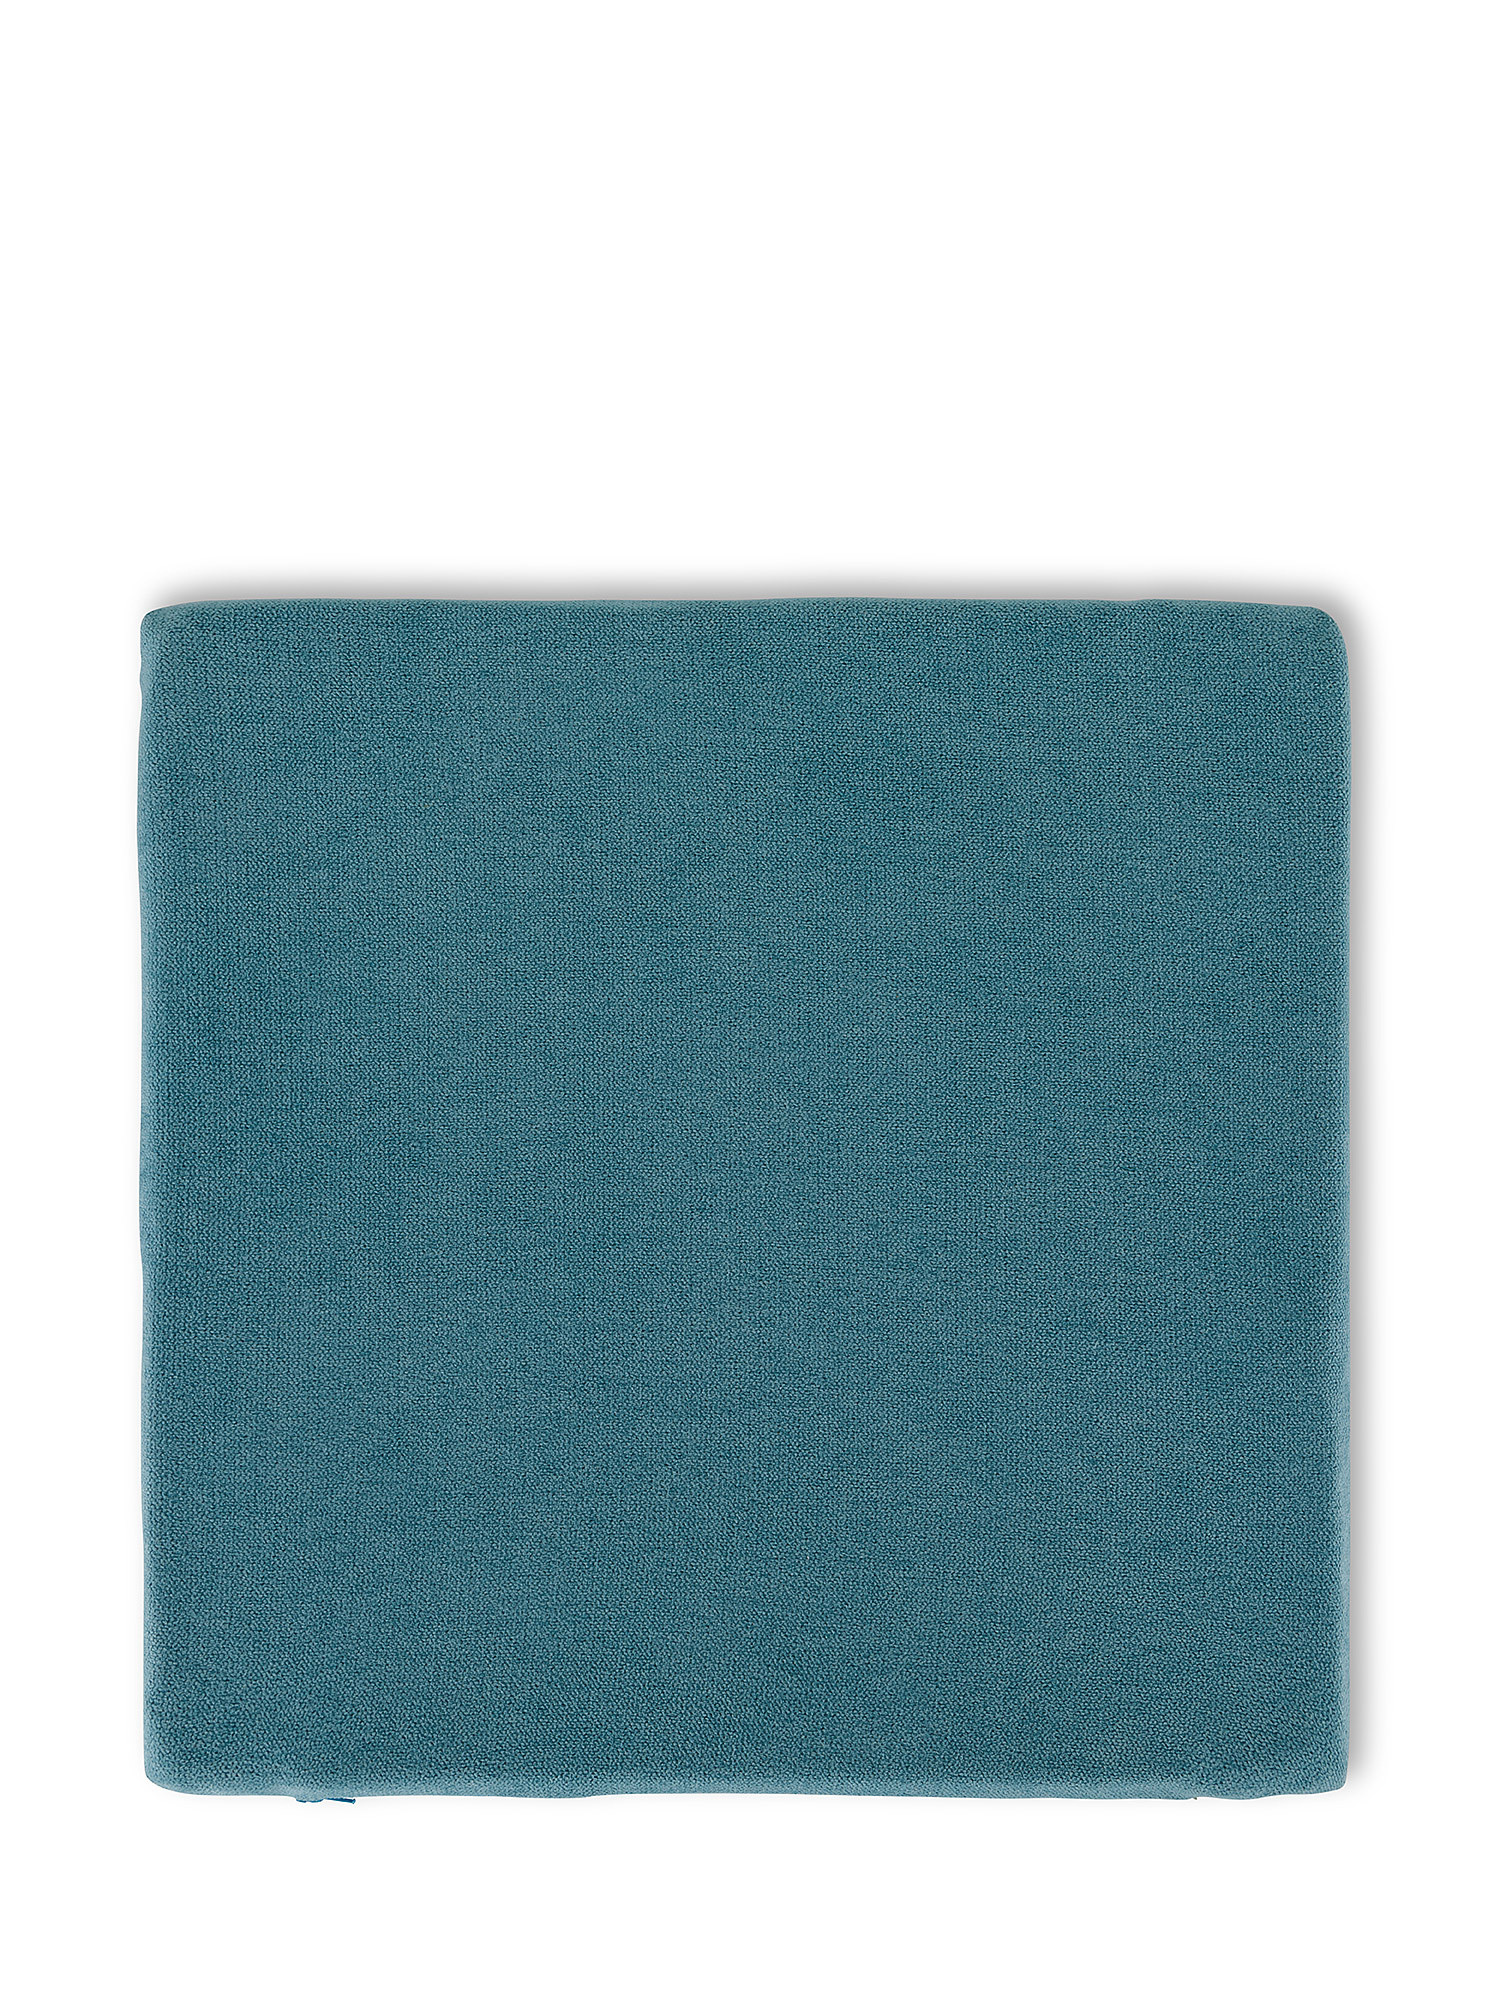 Cuscino da sedia in cotone tinta unita, Blu, large image number 0